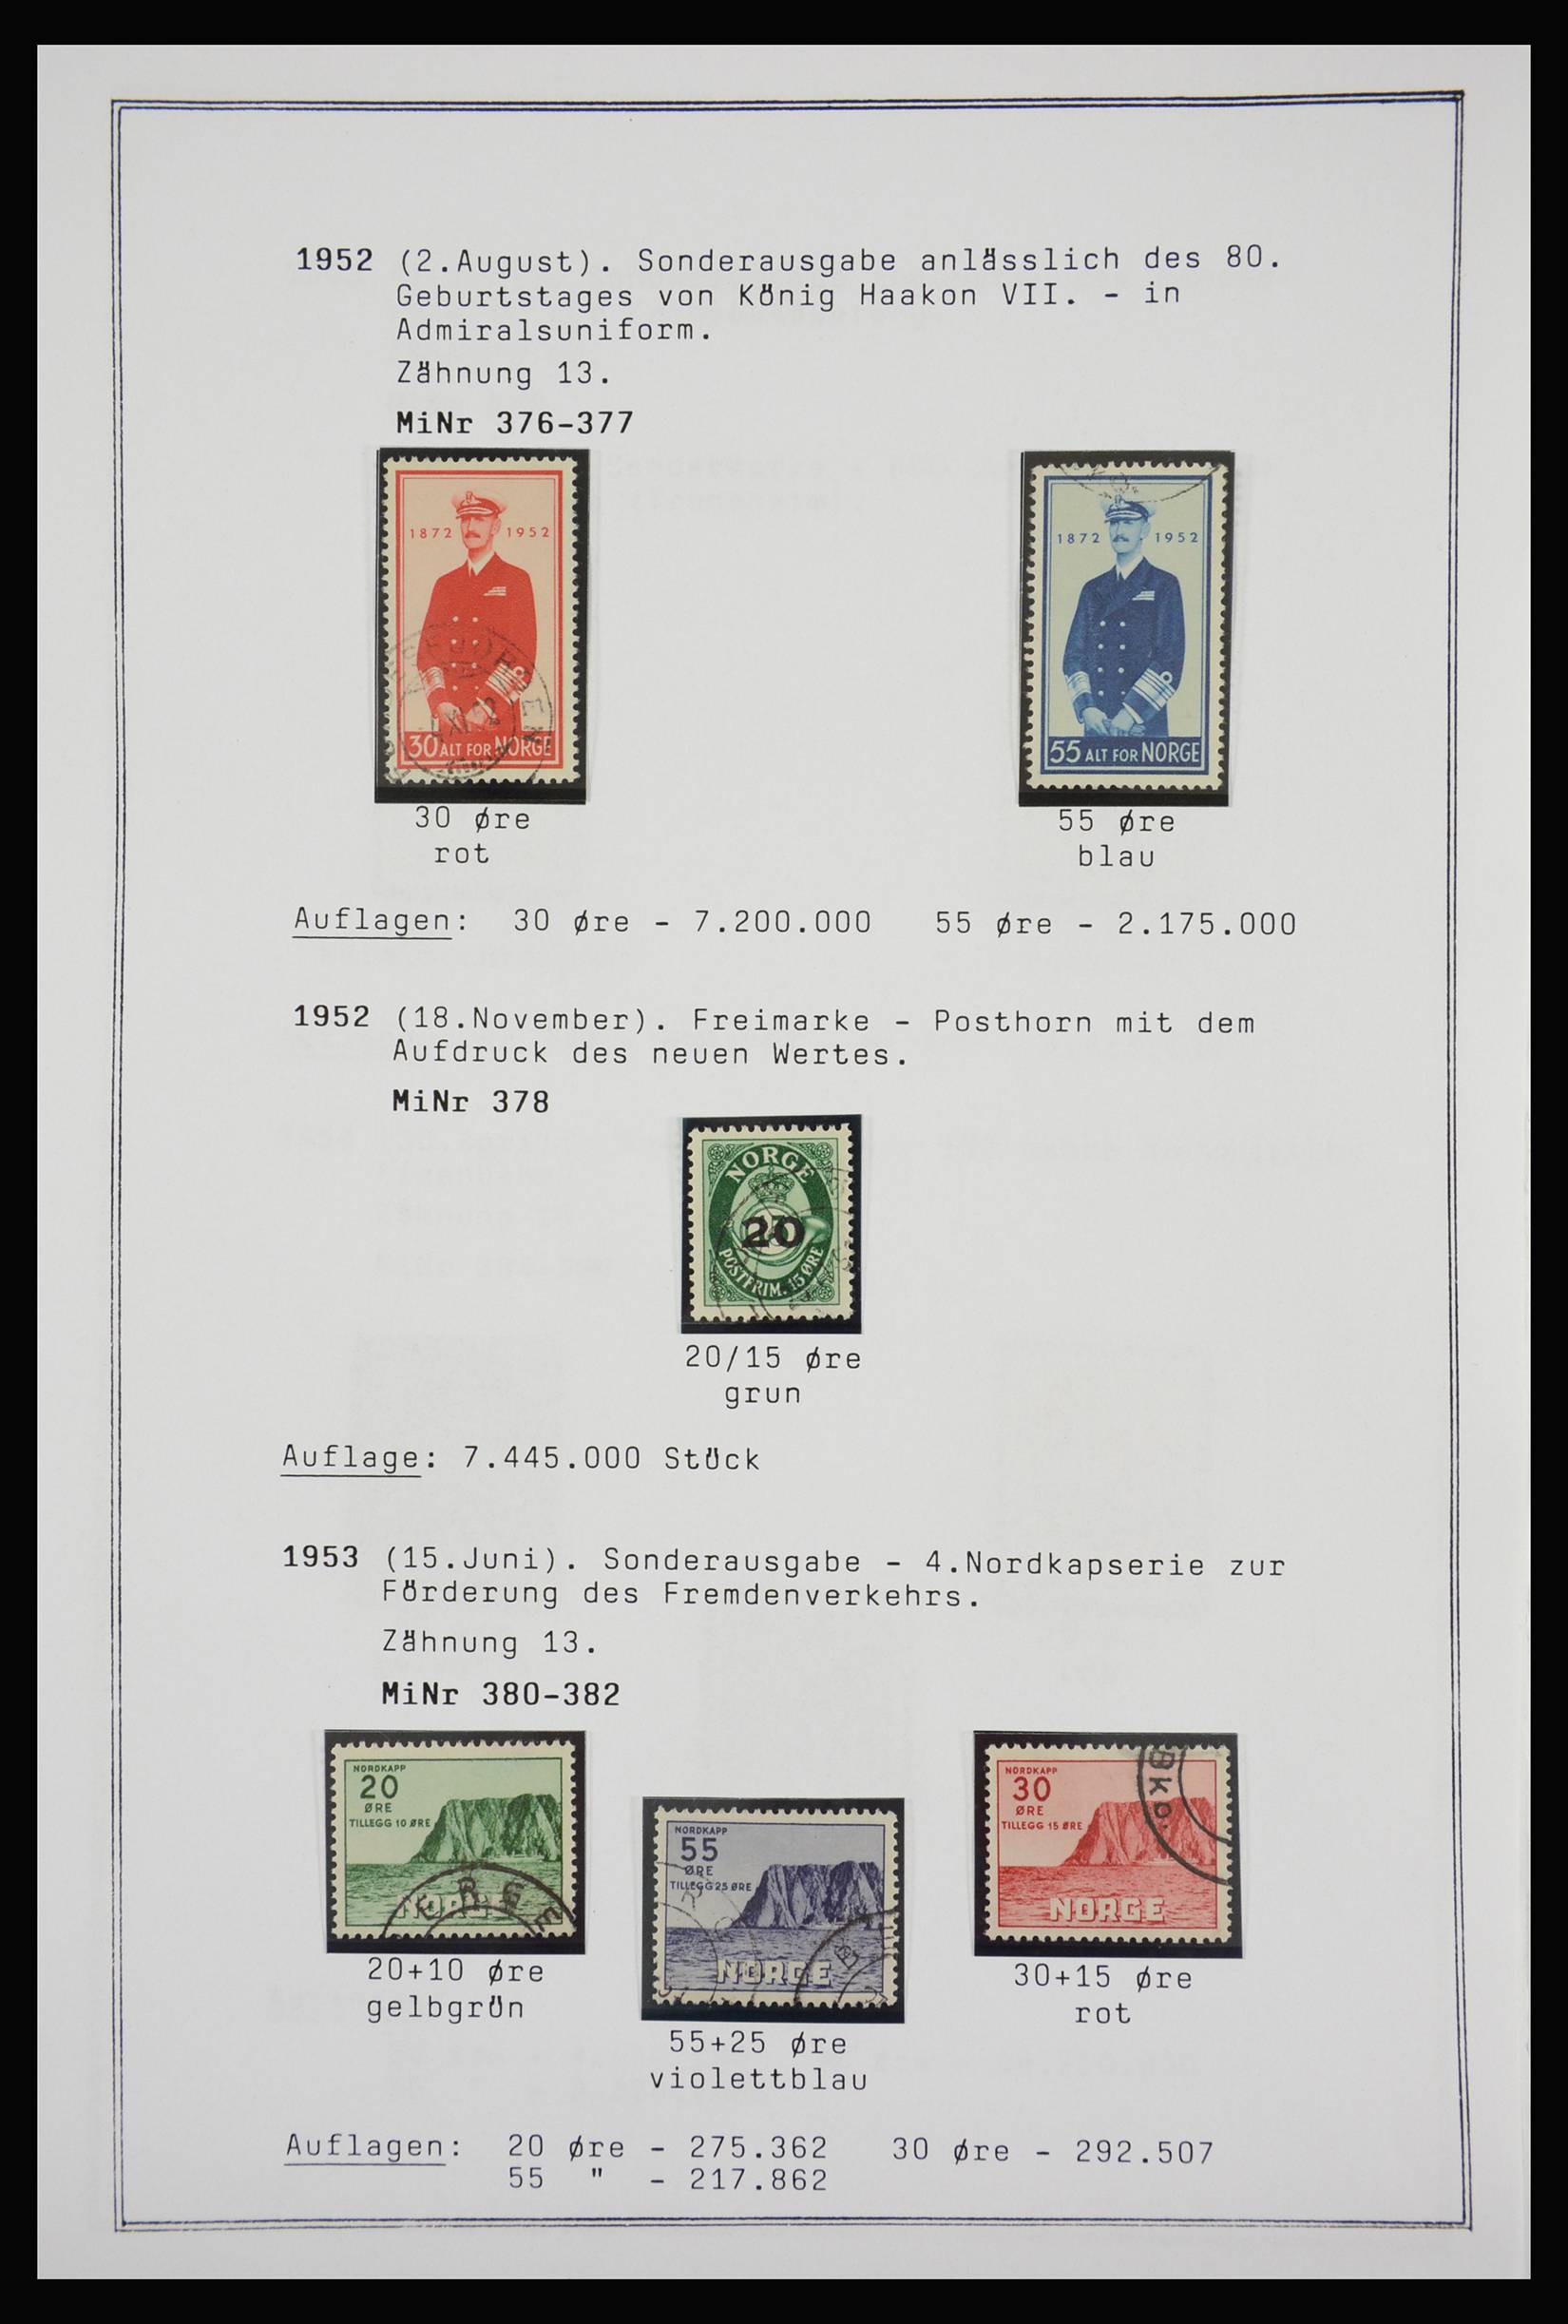 27925 209 - 27925 Scandinavia 1855-1957.